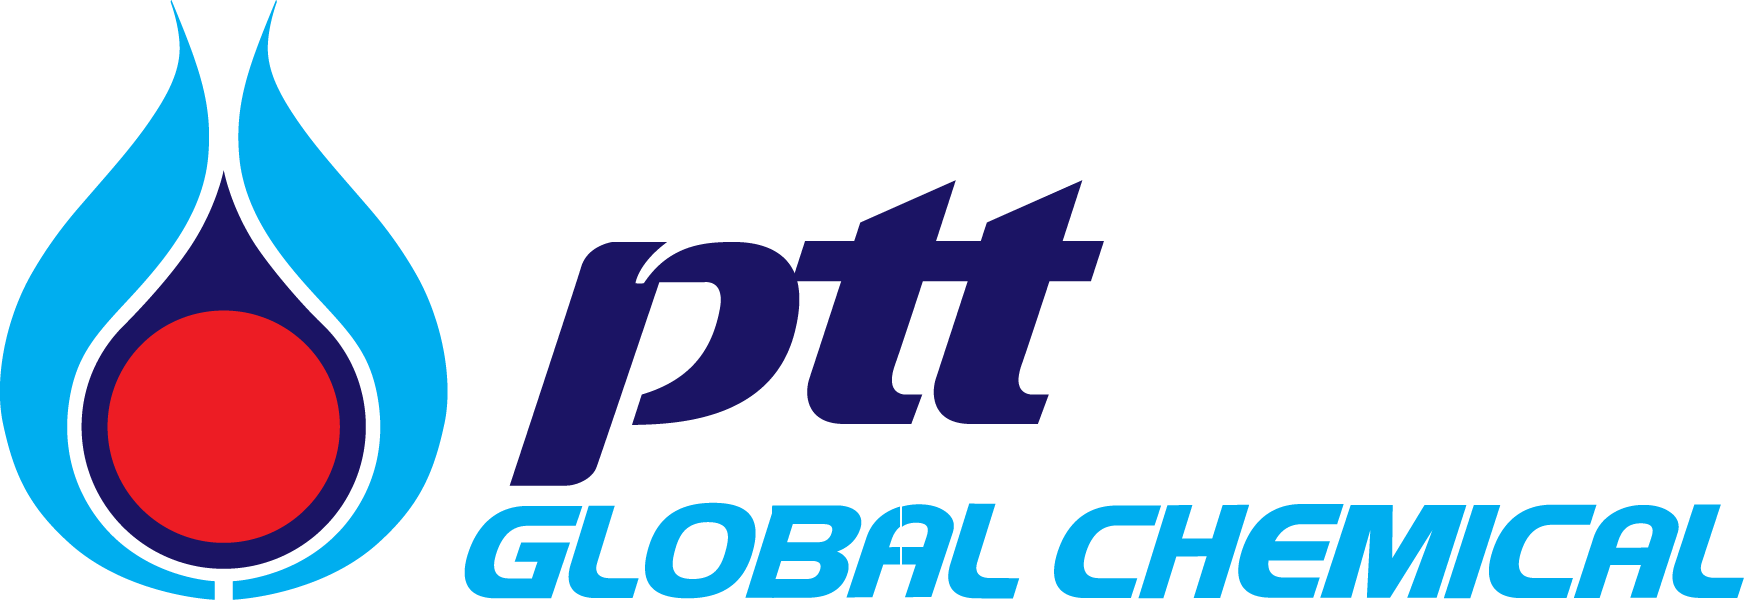 PTT Global Chemical